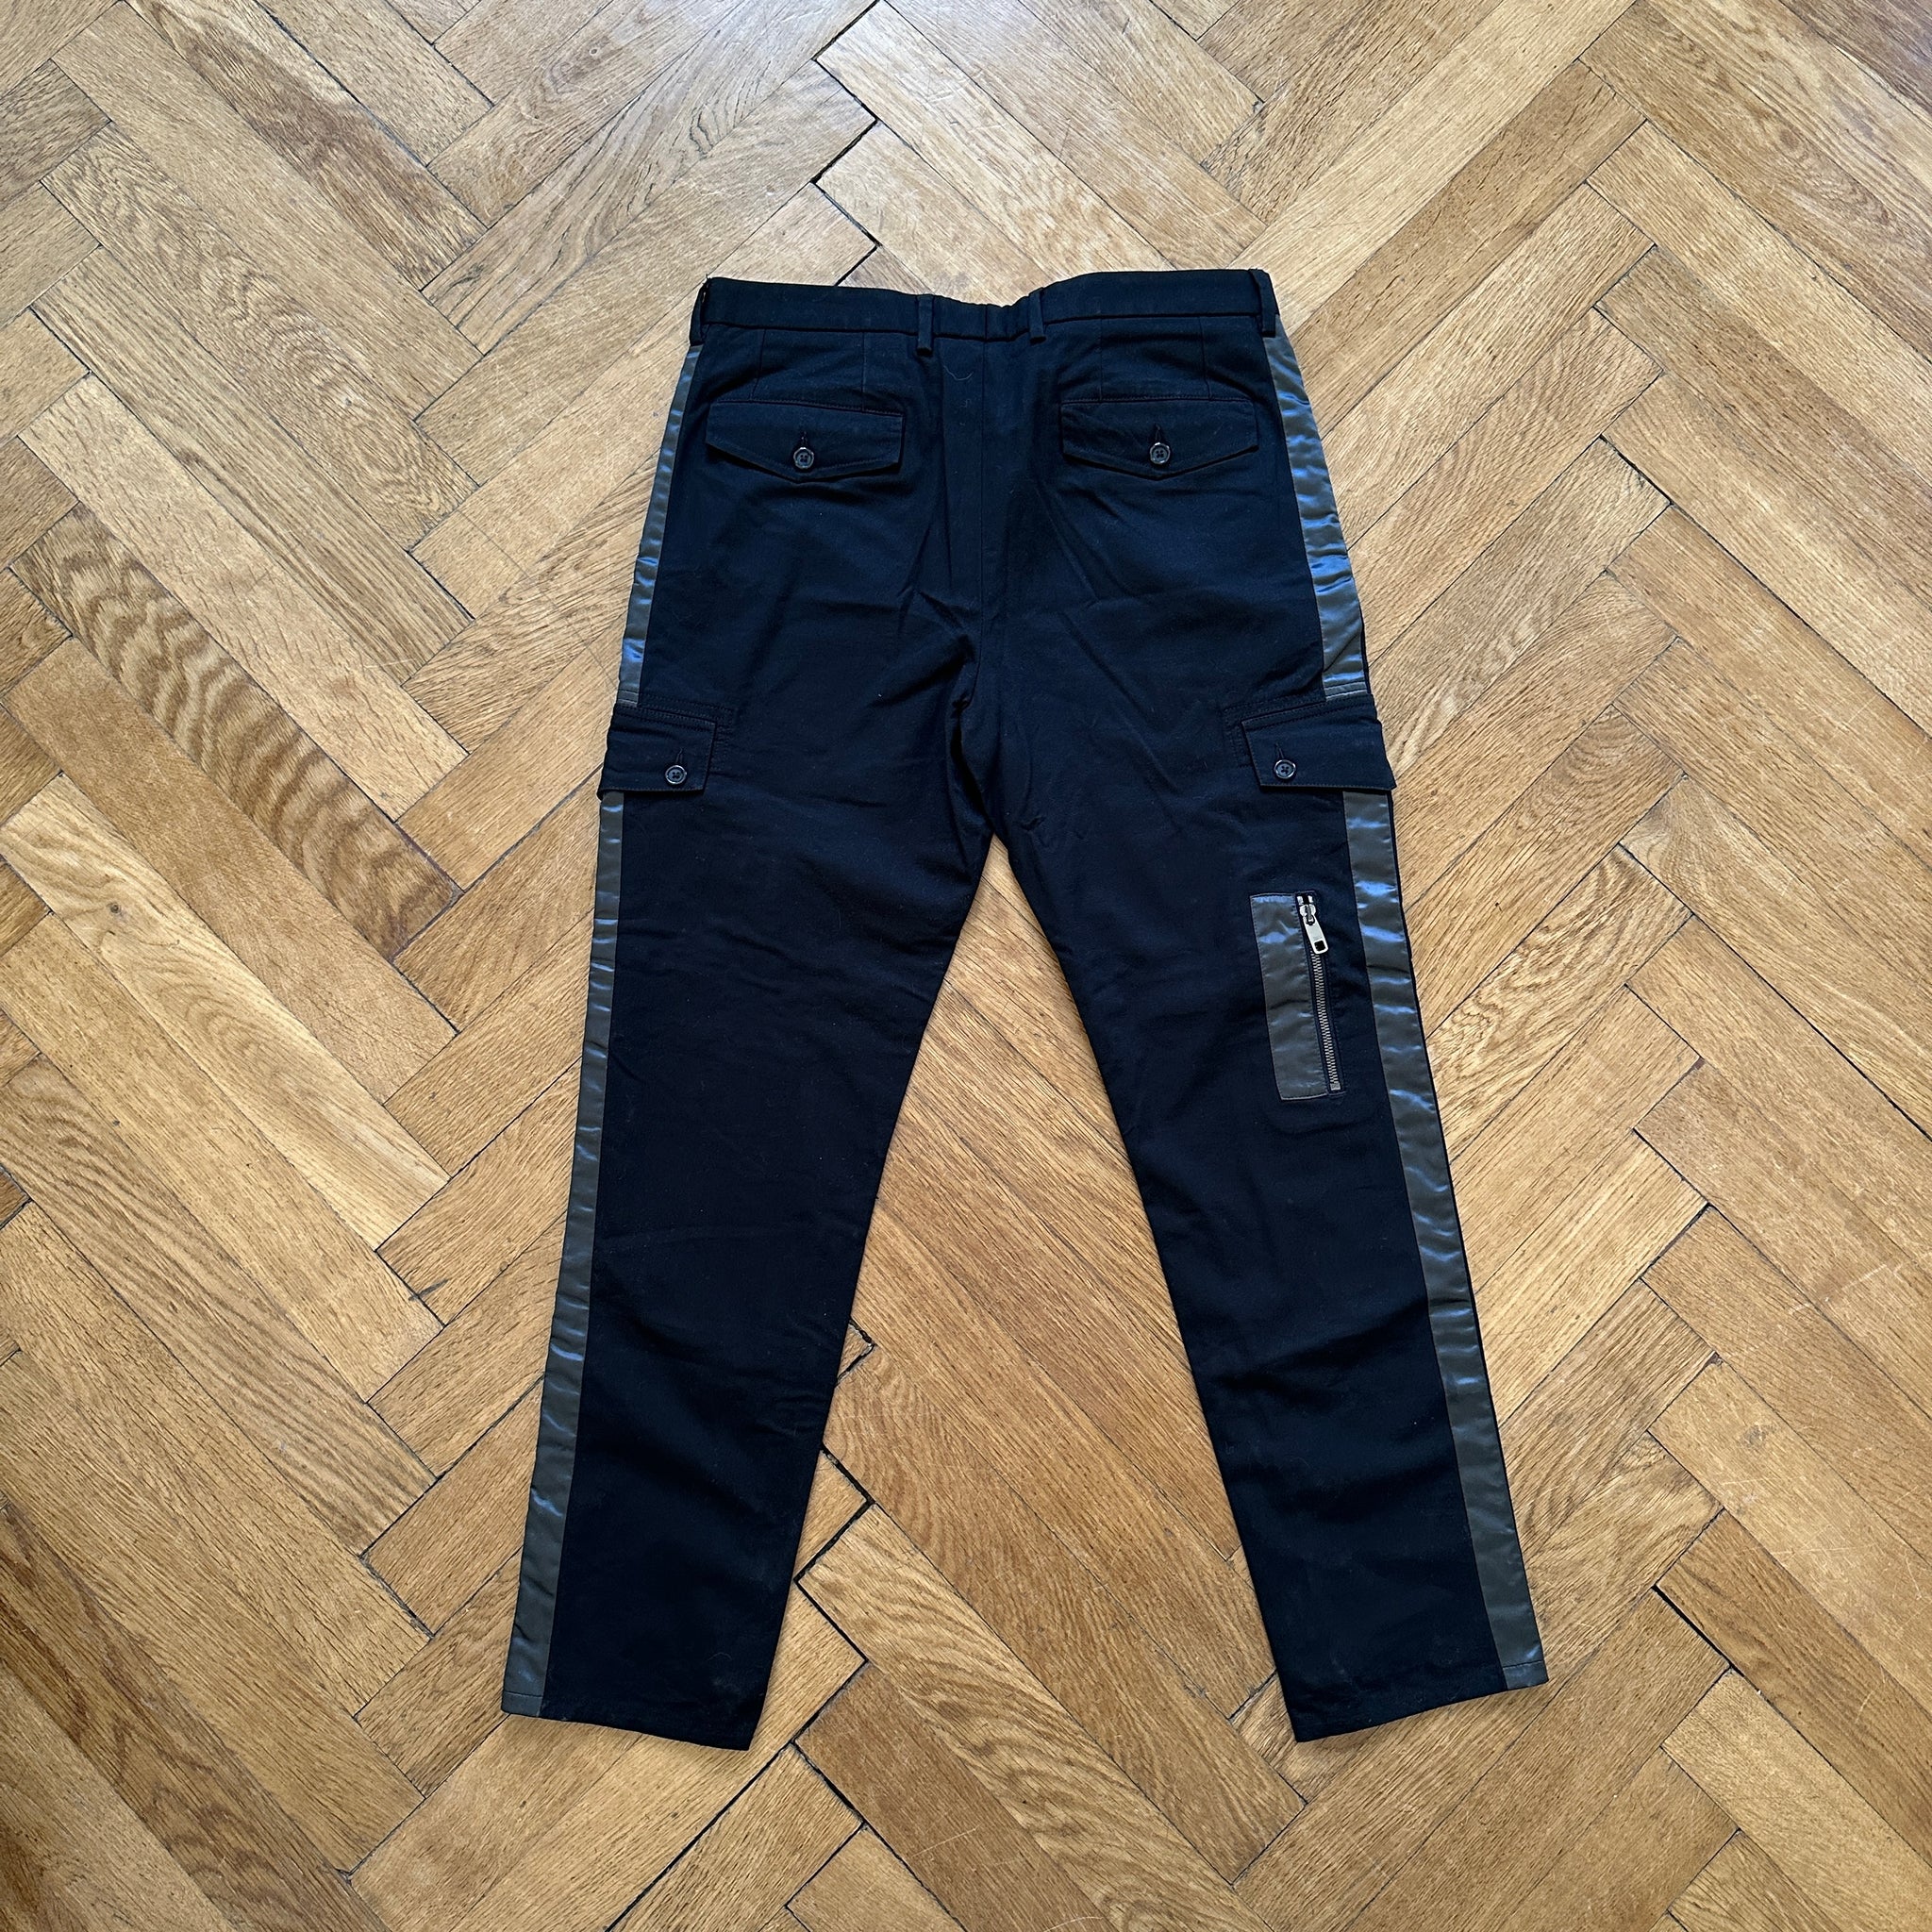 Cargo pants | Bottom-wear | seedstore.co.in – The Seed Store